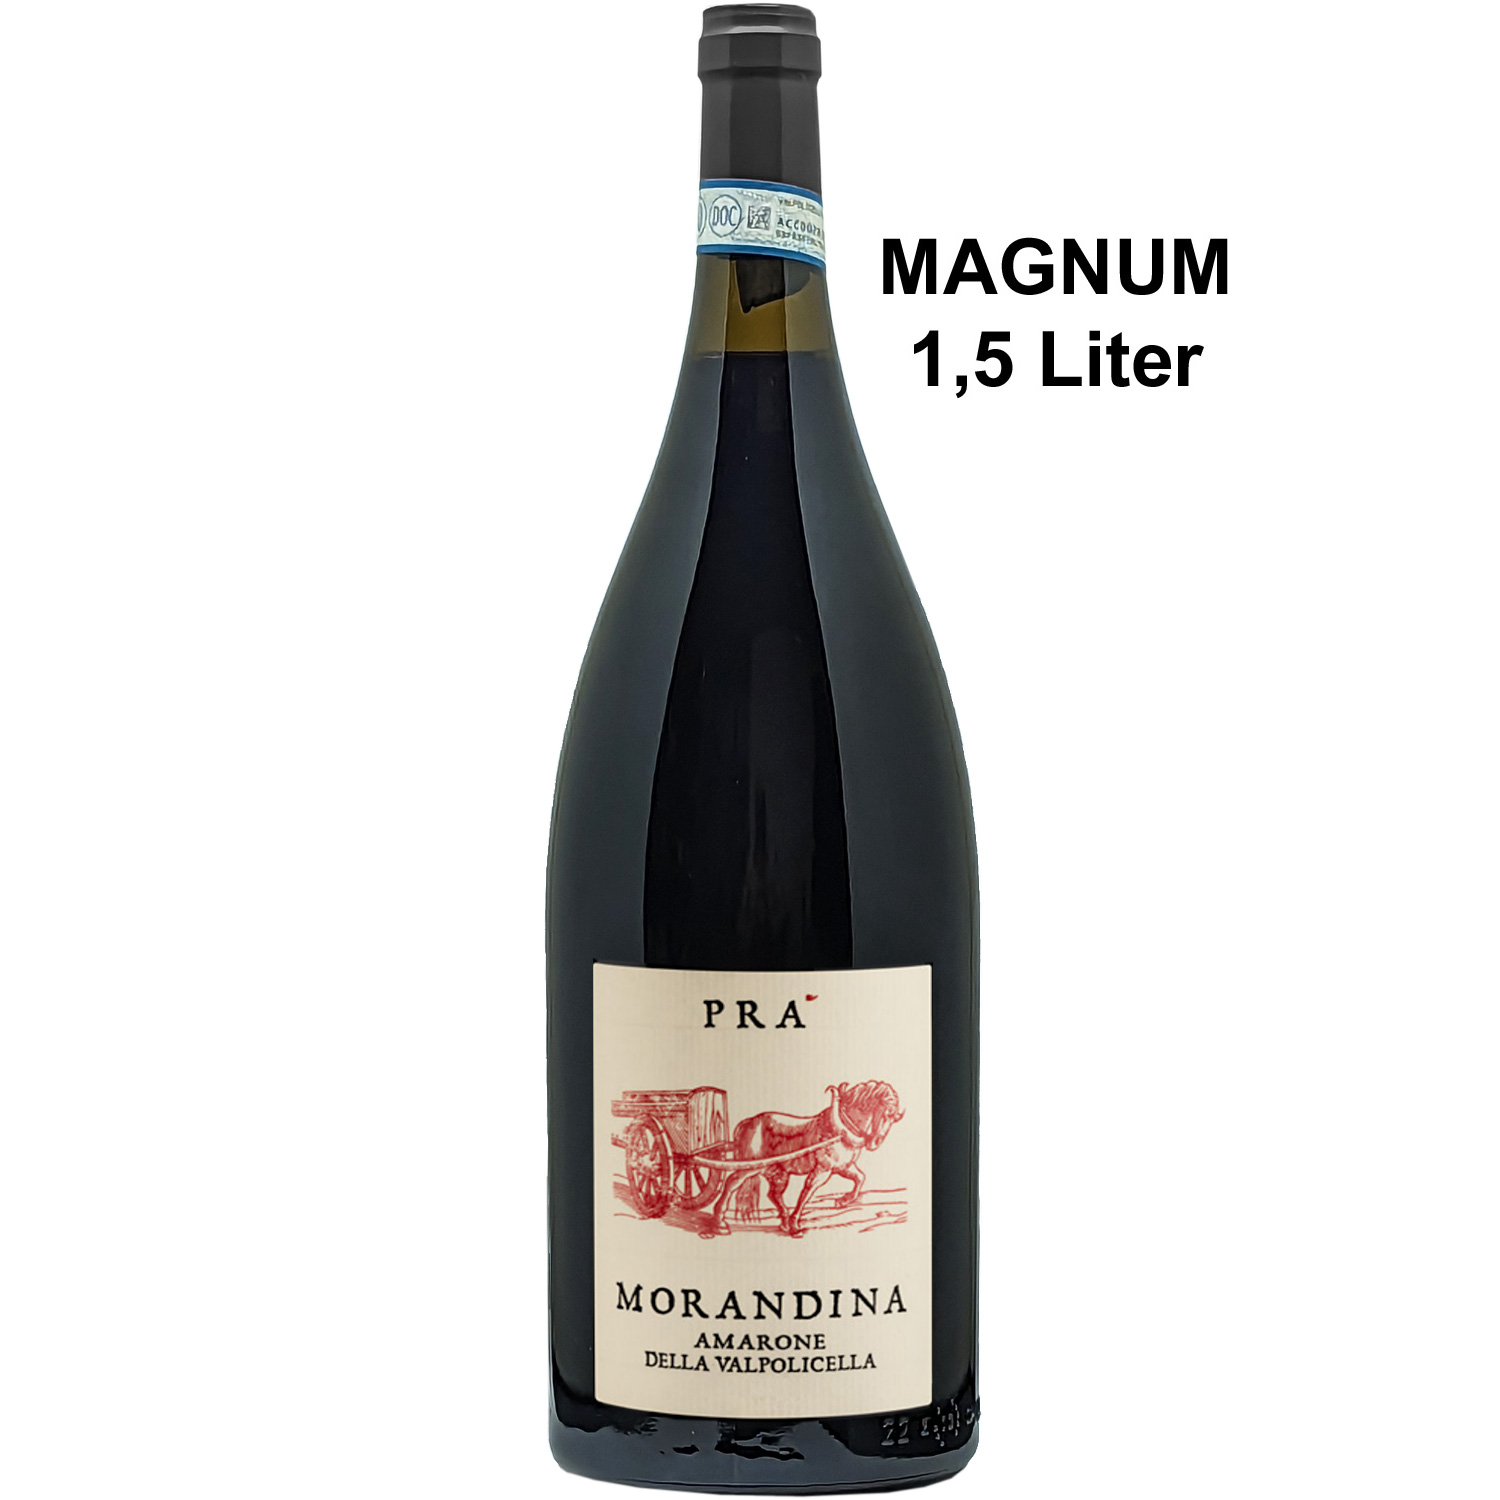 Magnum 2016 della Amarone Morandina Rotwein Pra | Italienischer Valpolicella